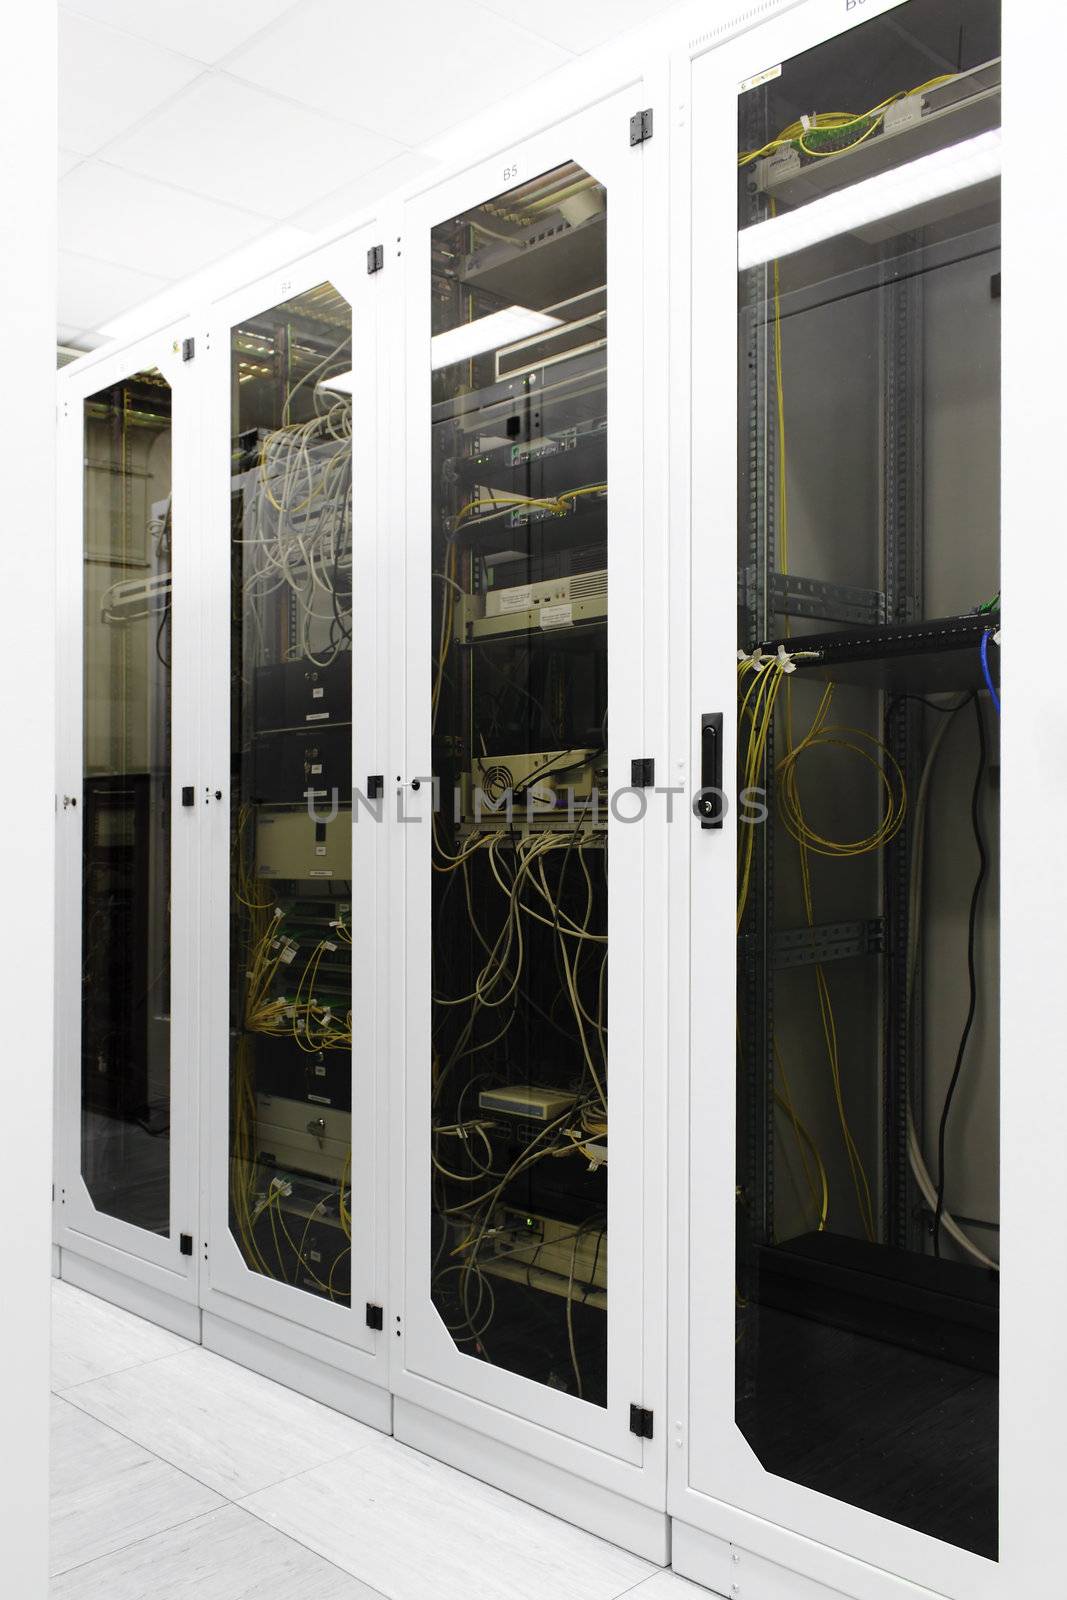 Racks with network equipment in technology telehouse room